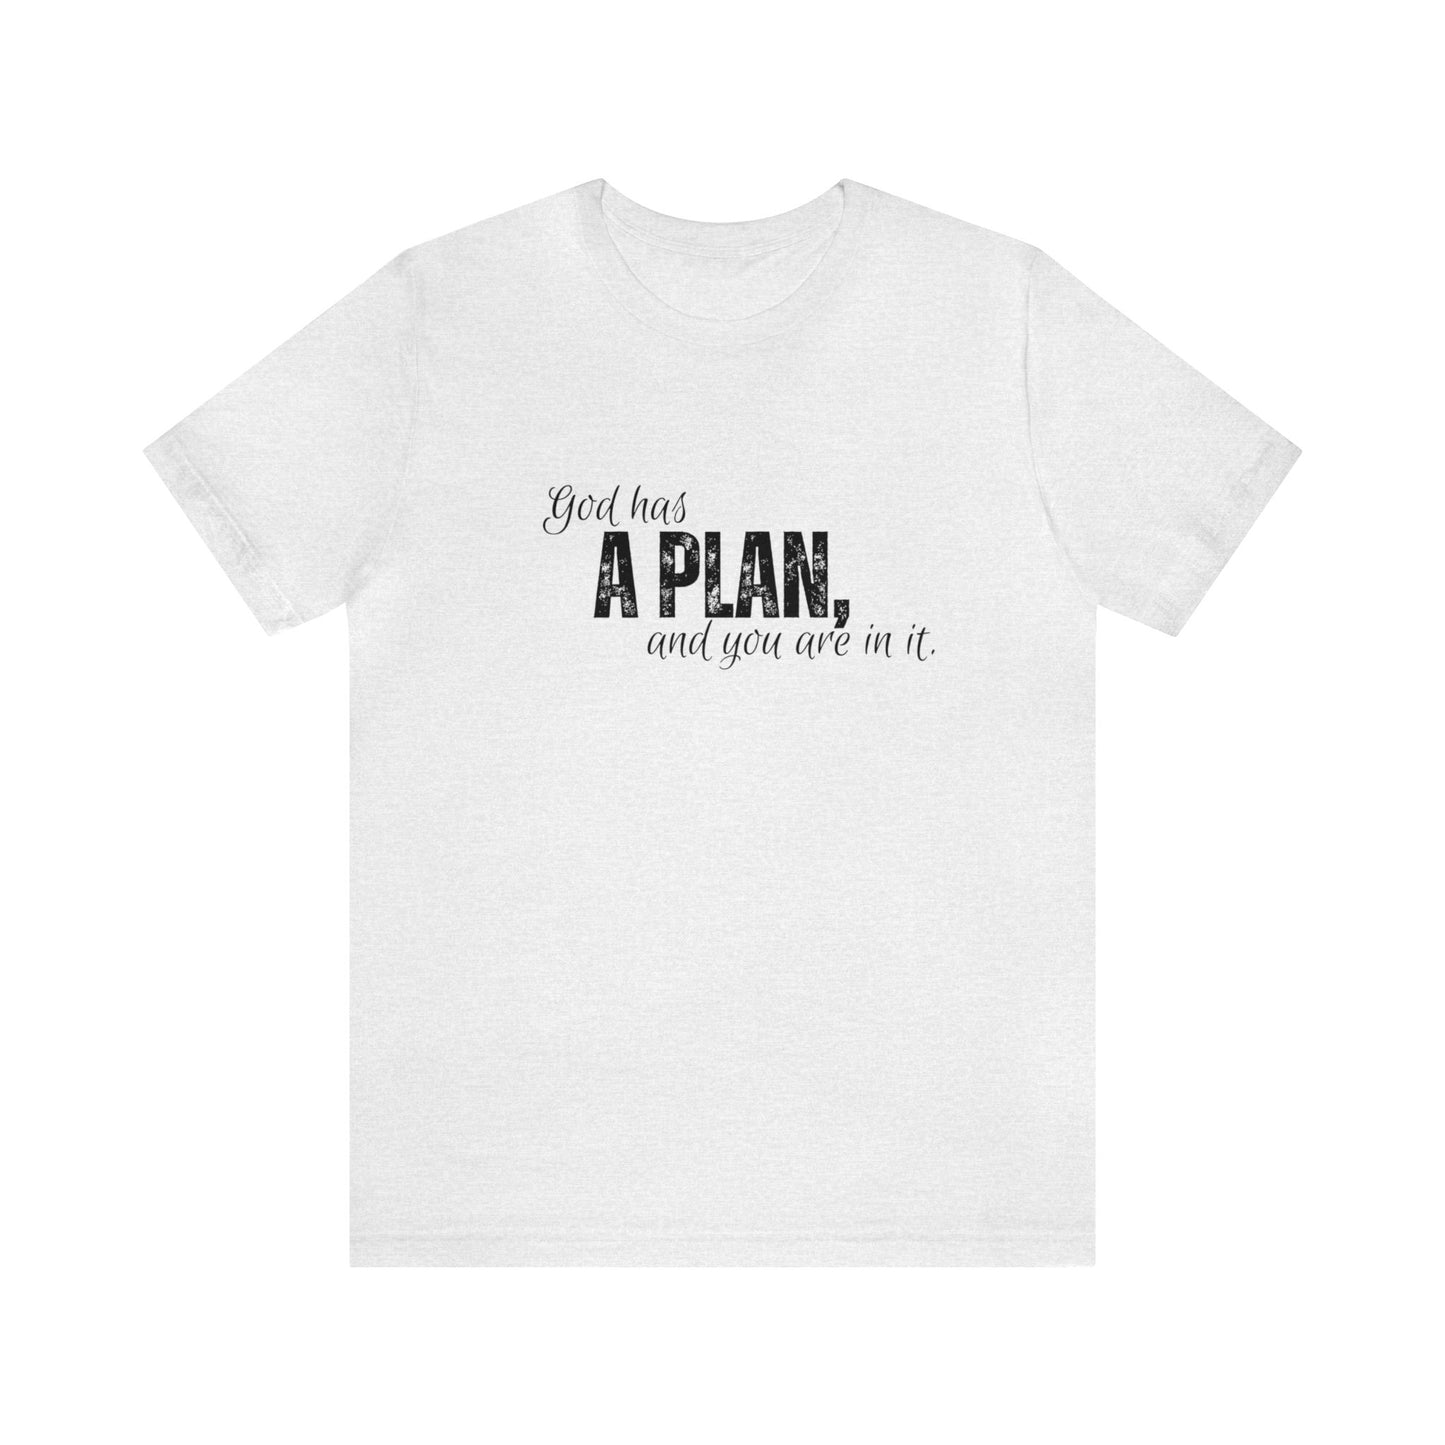 God has a plan, Christian T-shirt for Men and Women